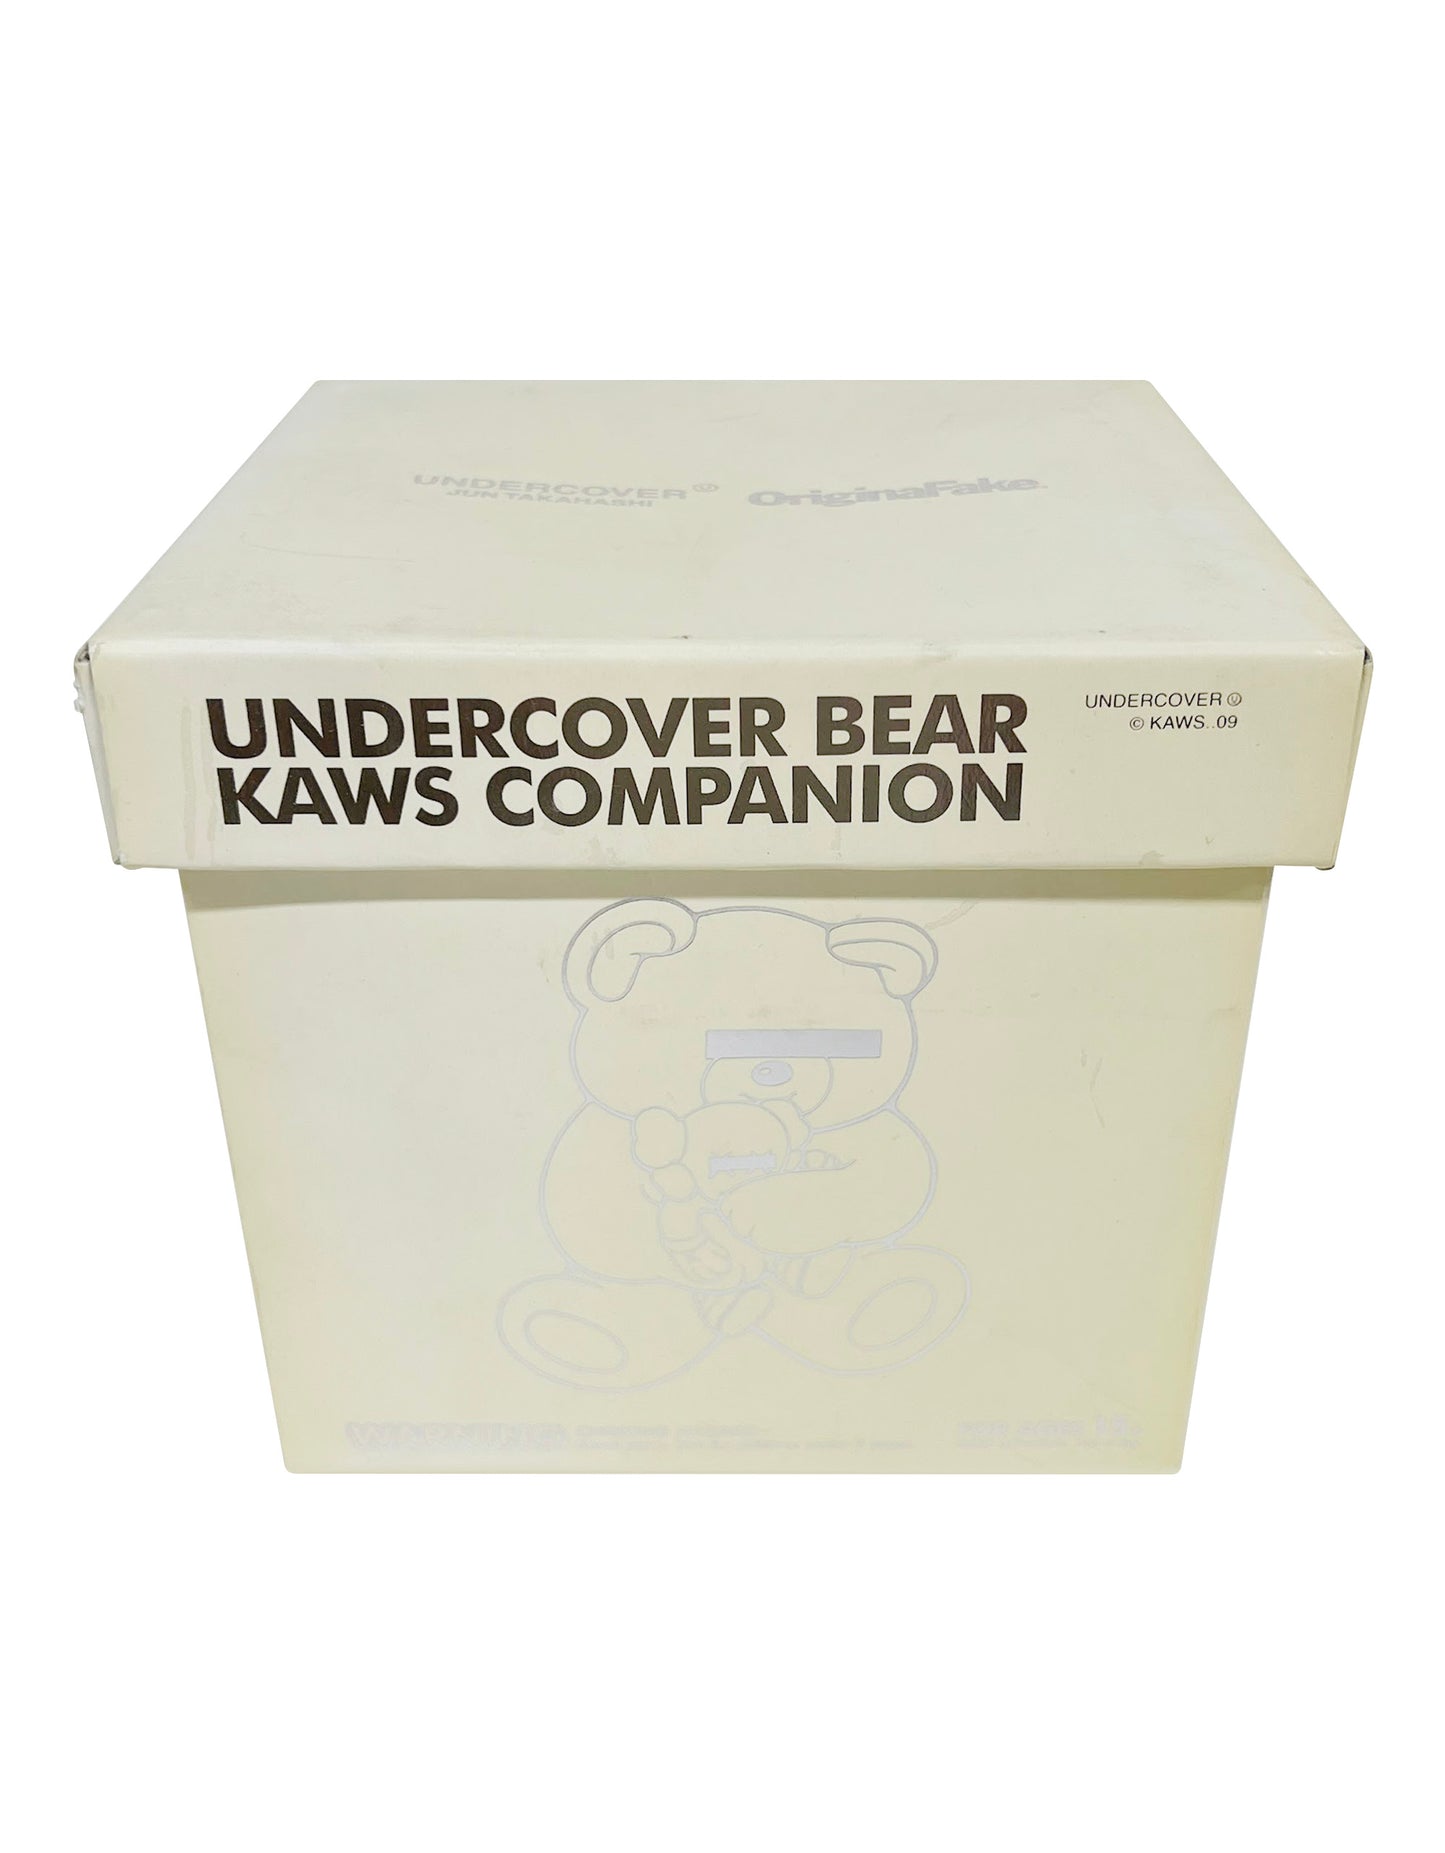 KAWS - Undercover Bear Companion White, 2009